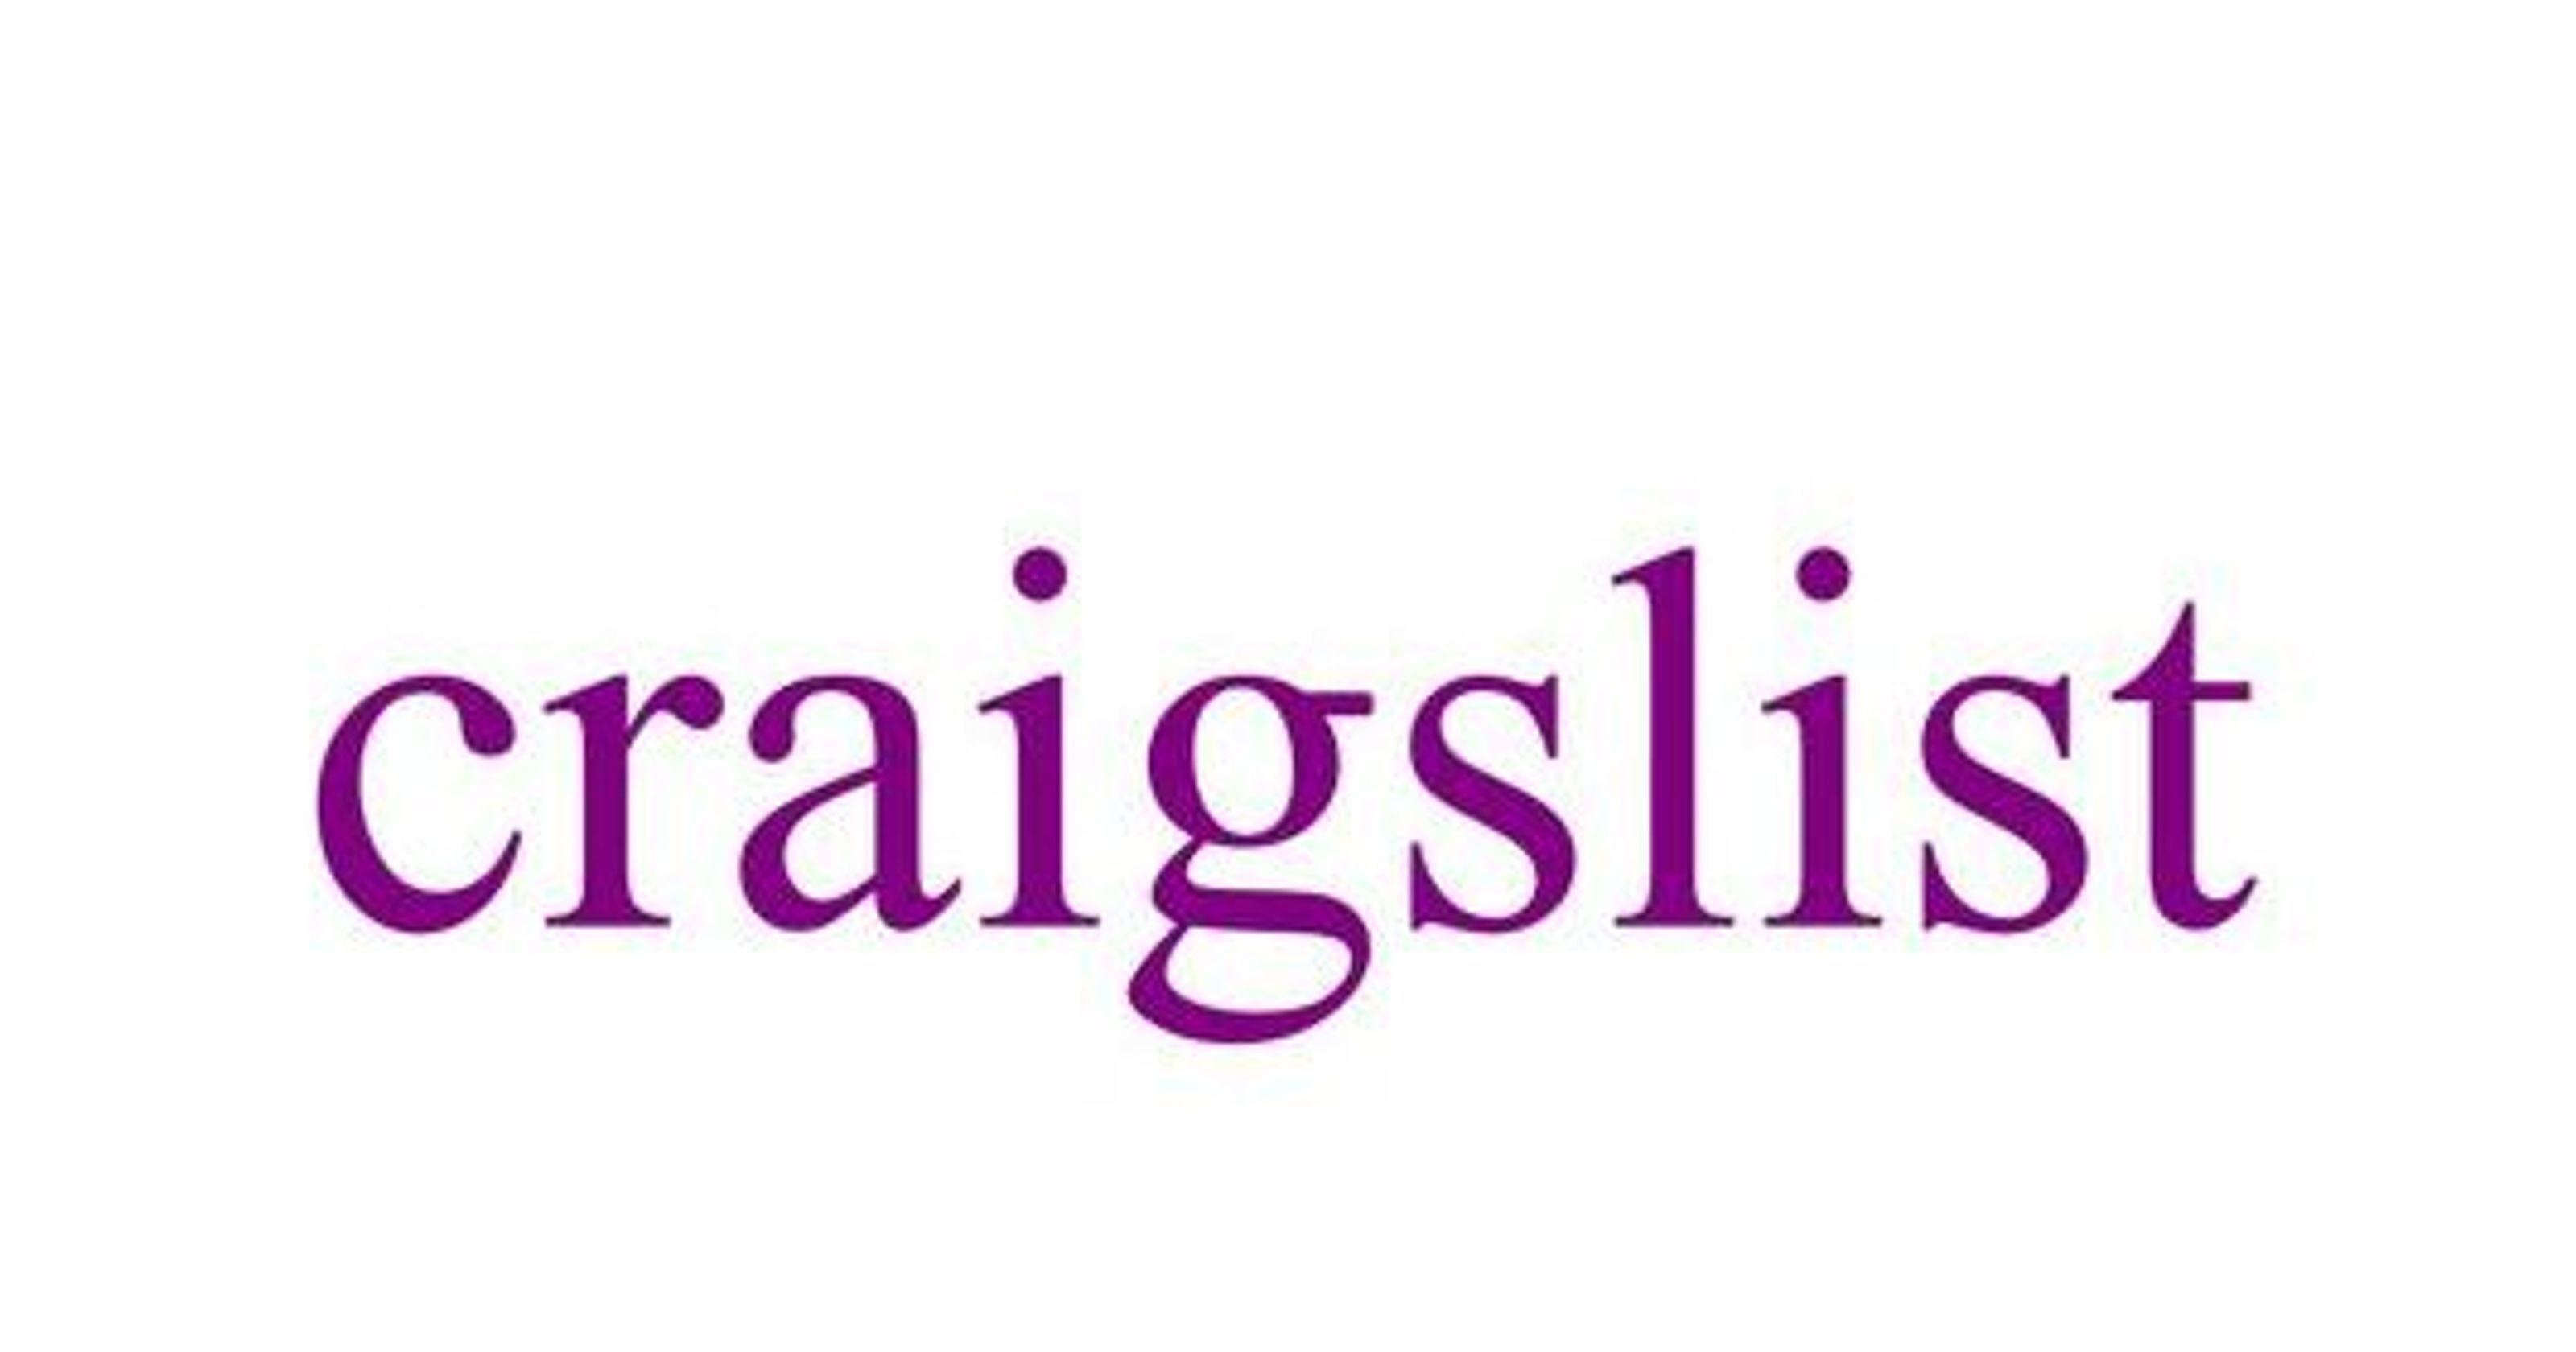 Official Craigslist Logo - Craigslist shuts down its Personals ads after Congress passes FOSTA